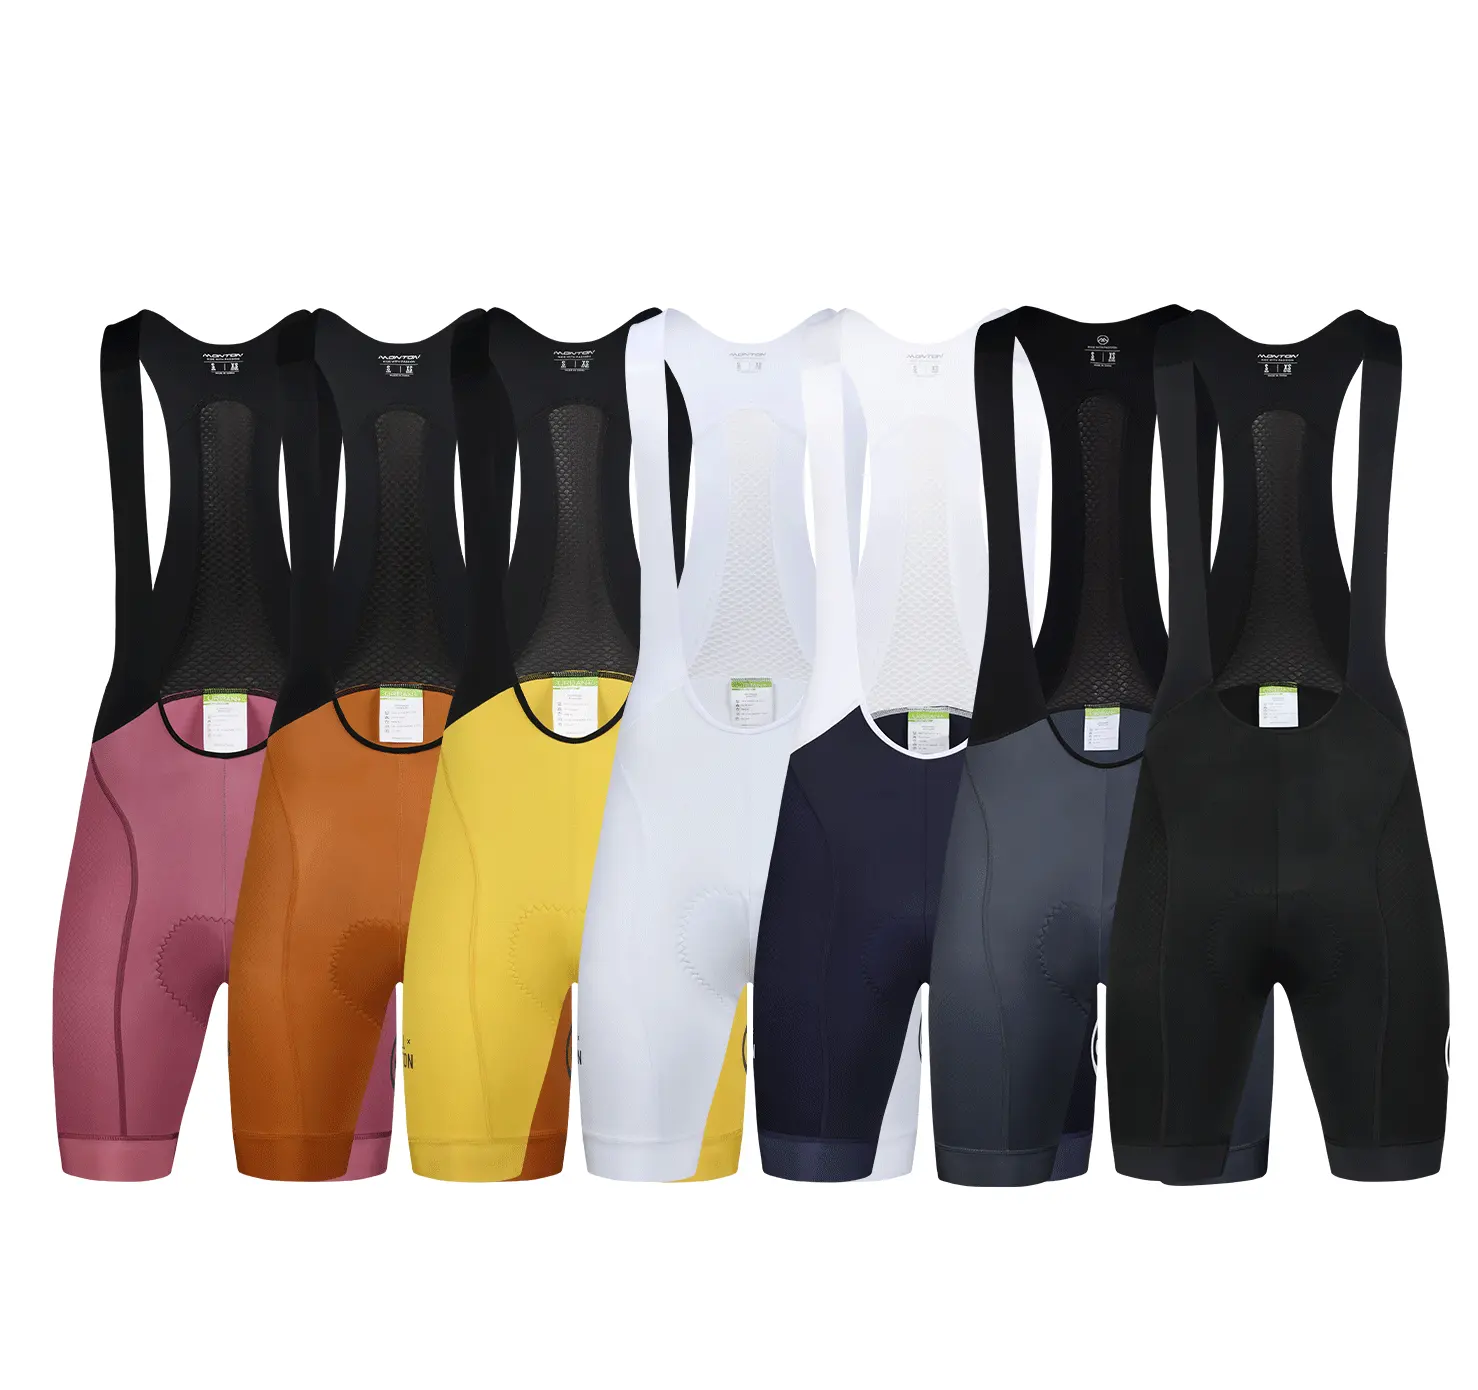 CYCLINGBOX MONTON Custom Multi solid color Compression Lycra padded shorts cycling bib shorts